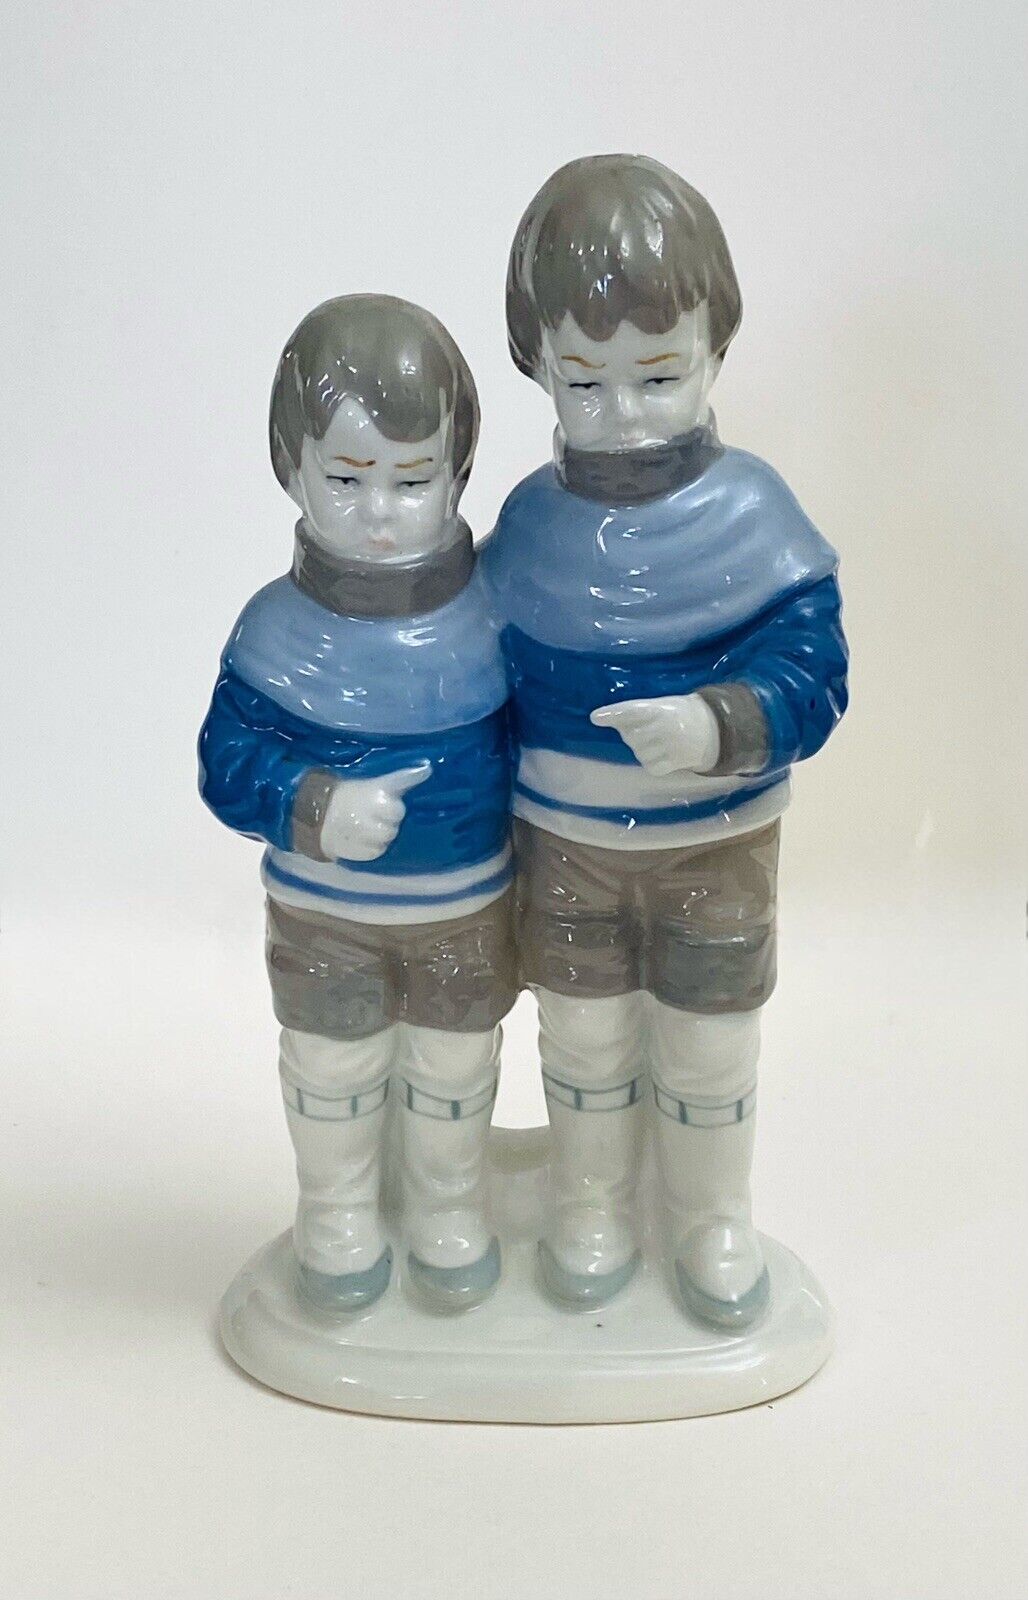 Vintage Lippalsdorf GDR German Porcelain Figurines, Boys In Blue & Gray Sweaters